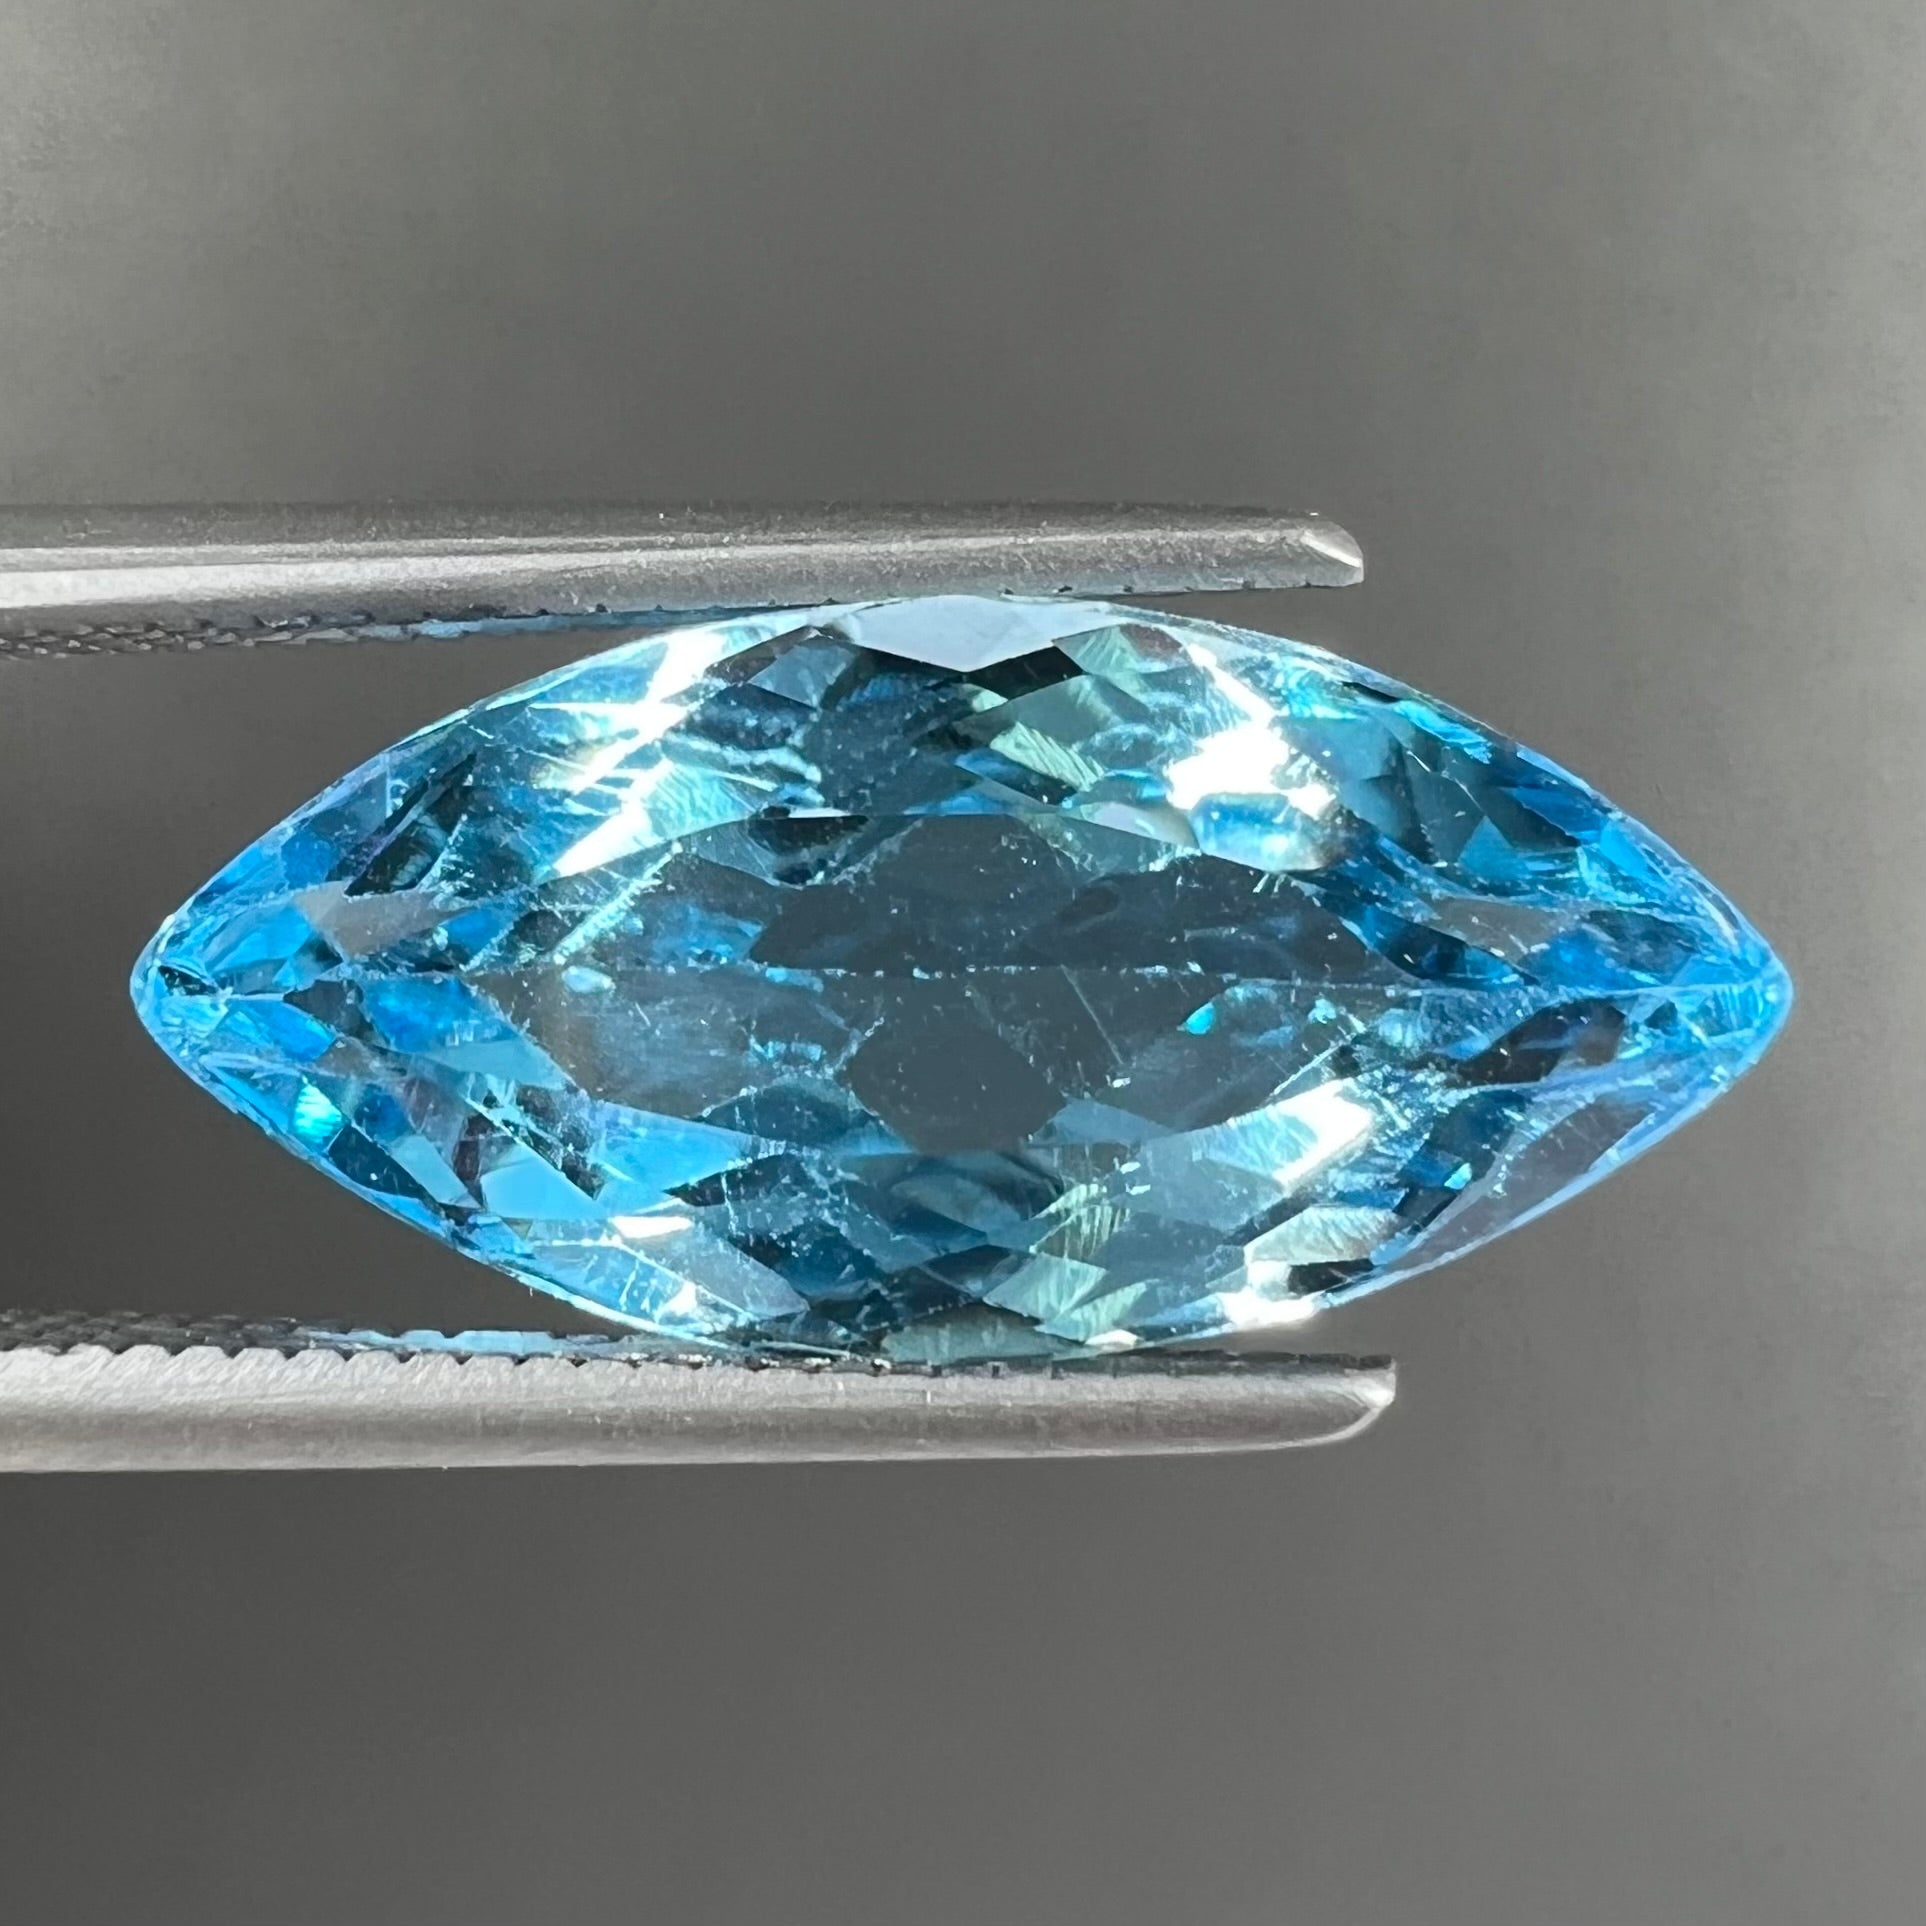 A loose, marquise cut blue topaz gemstone.